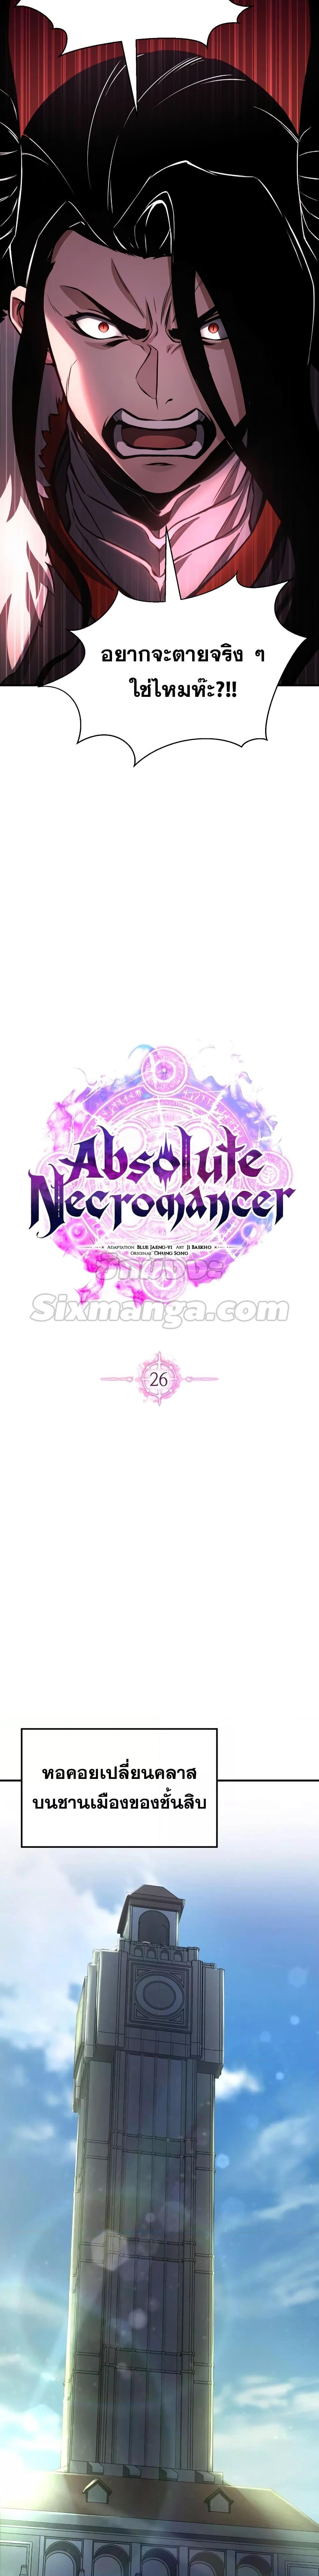 Absolute Necromancer 26 06